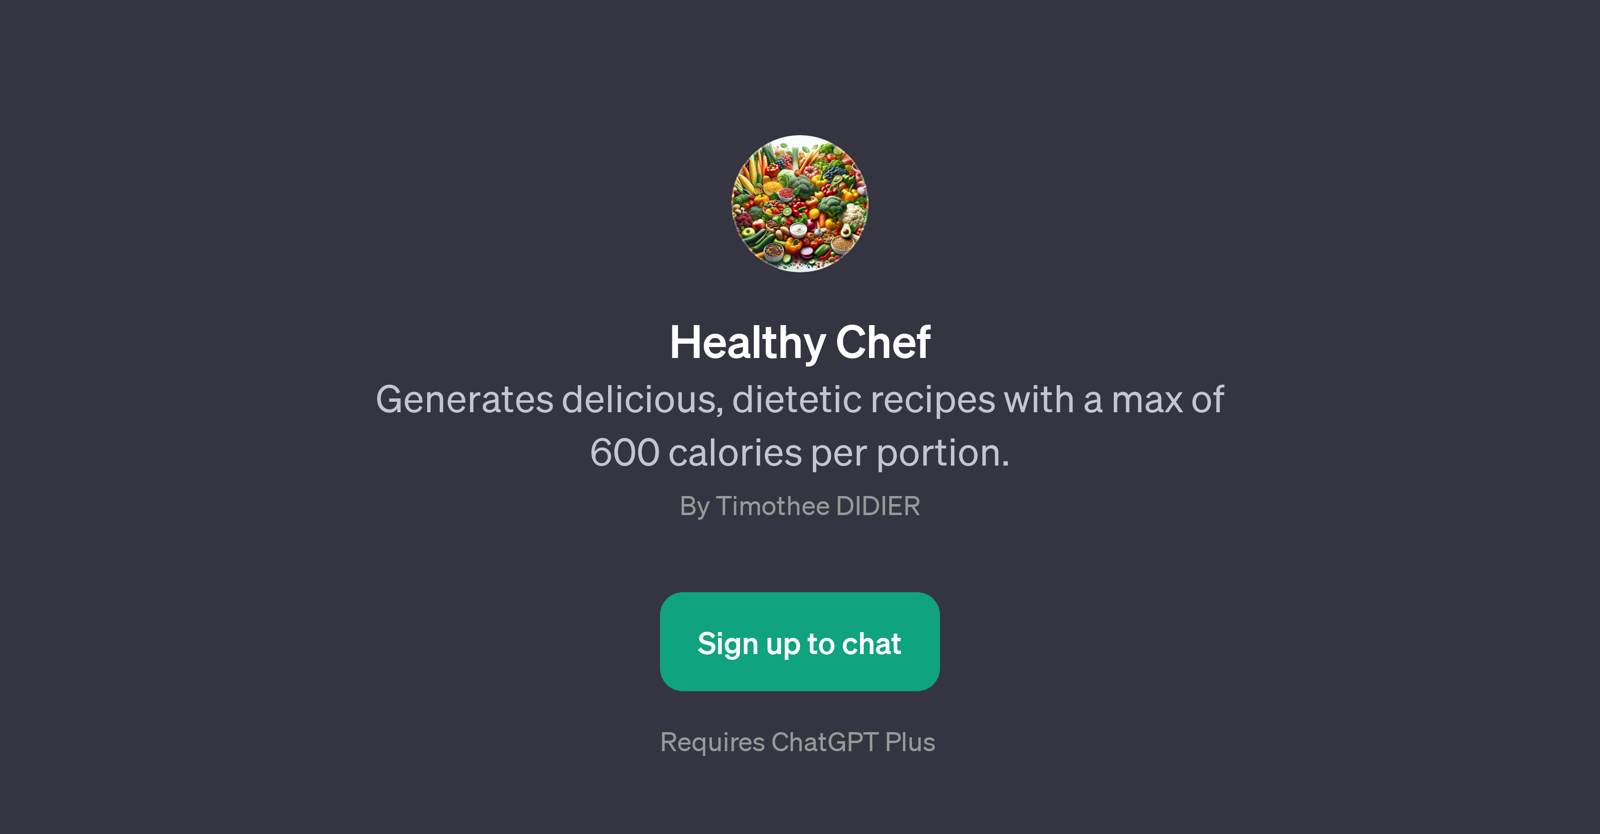 Healthy Chef website